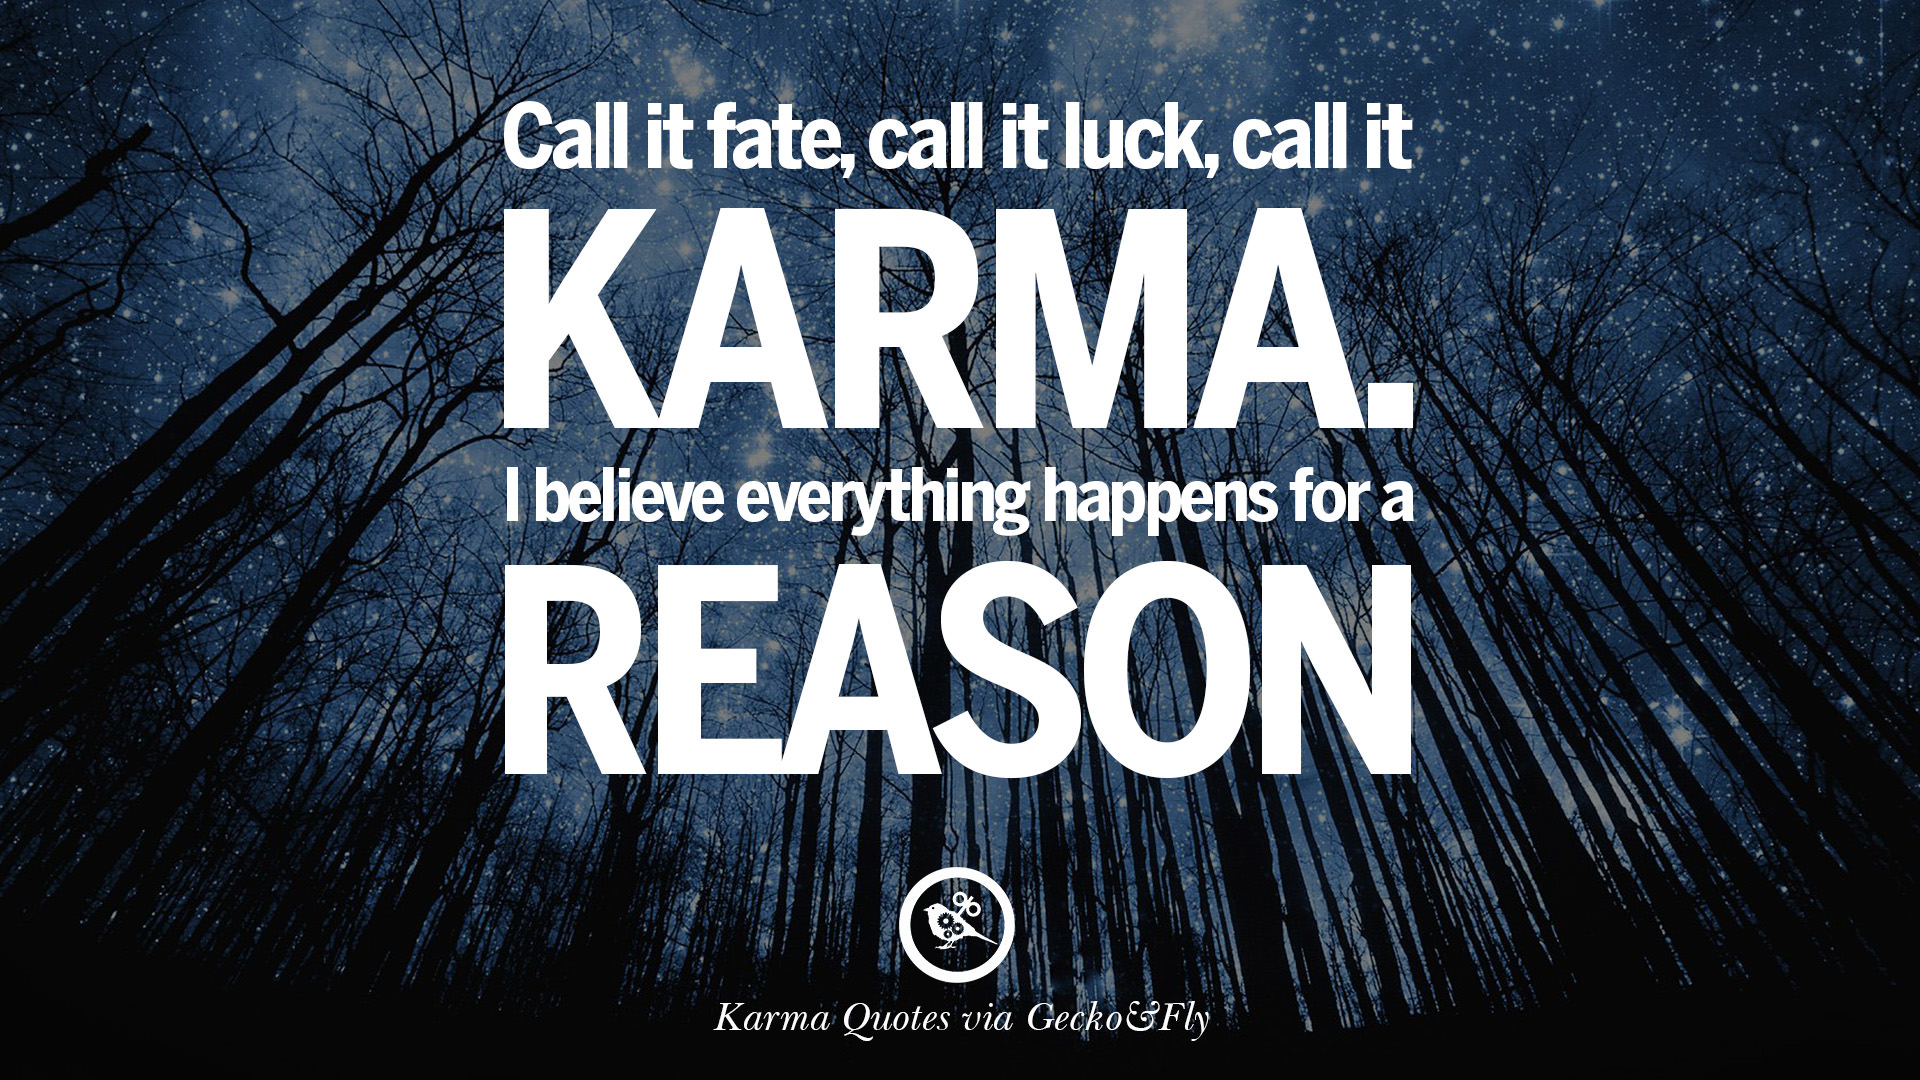 96+ Wallpaper Quotes On Karma Populer Terbaik - Posts.id